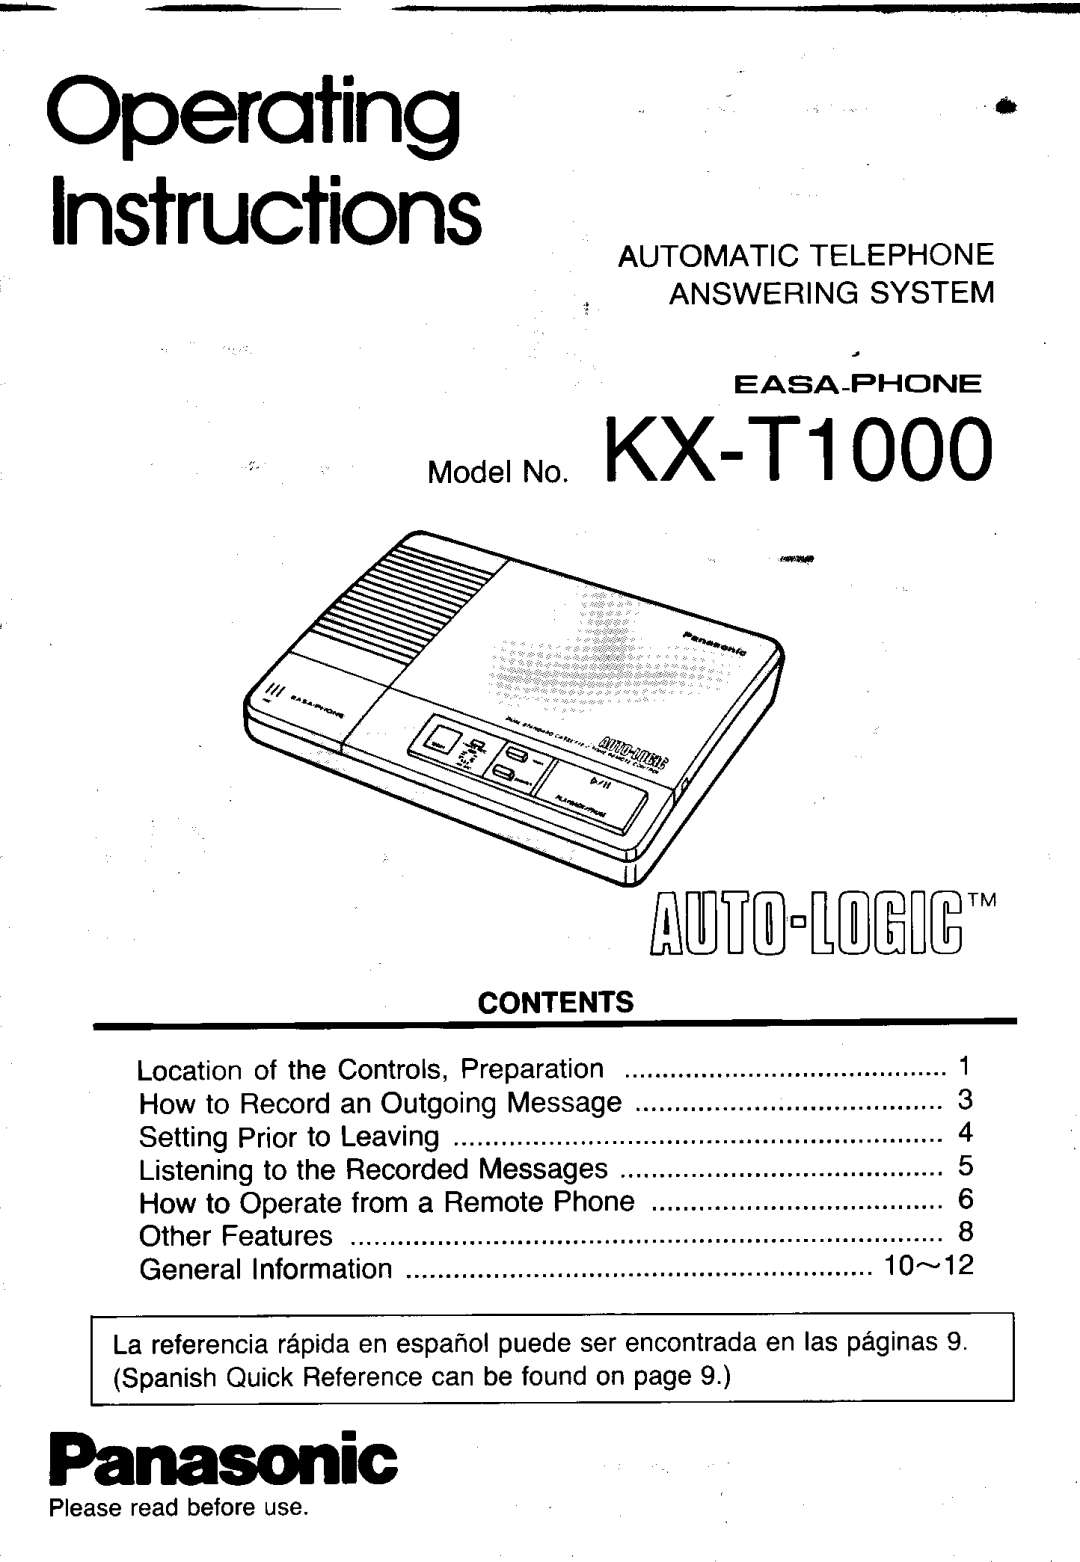 Panasonic KX-T1000 manual Automatictelephone Answeringsystem, Contents, Howto RecordanOutgoingMessage, OtherFeatures 